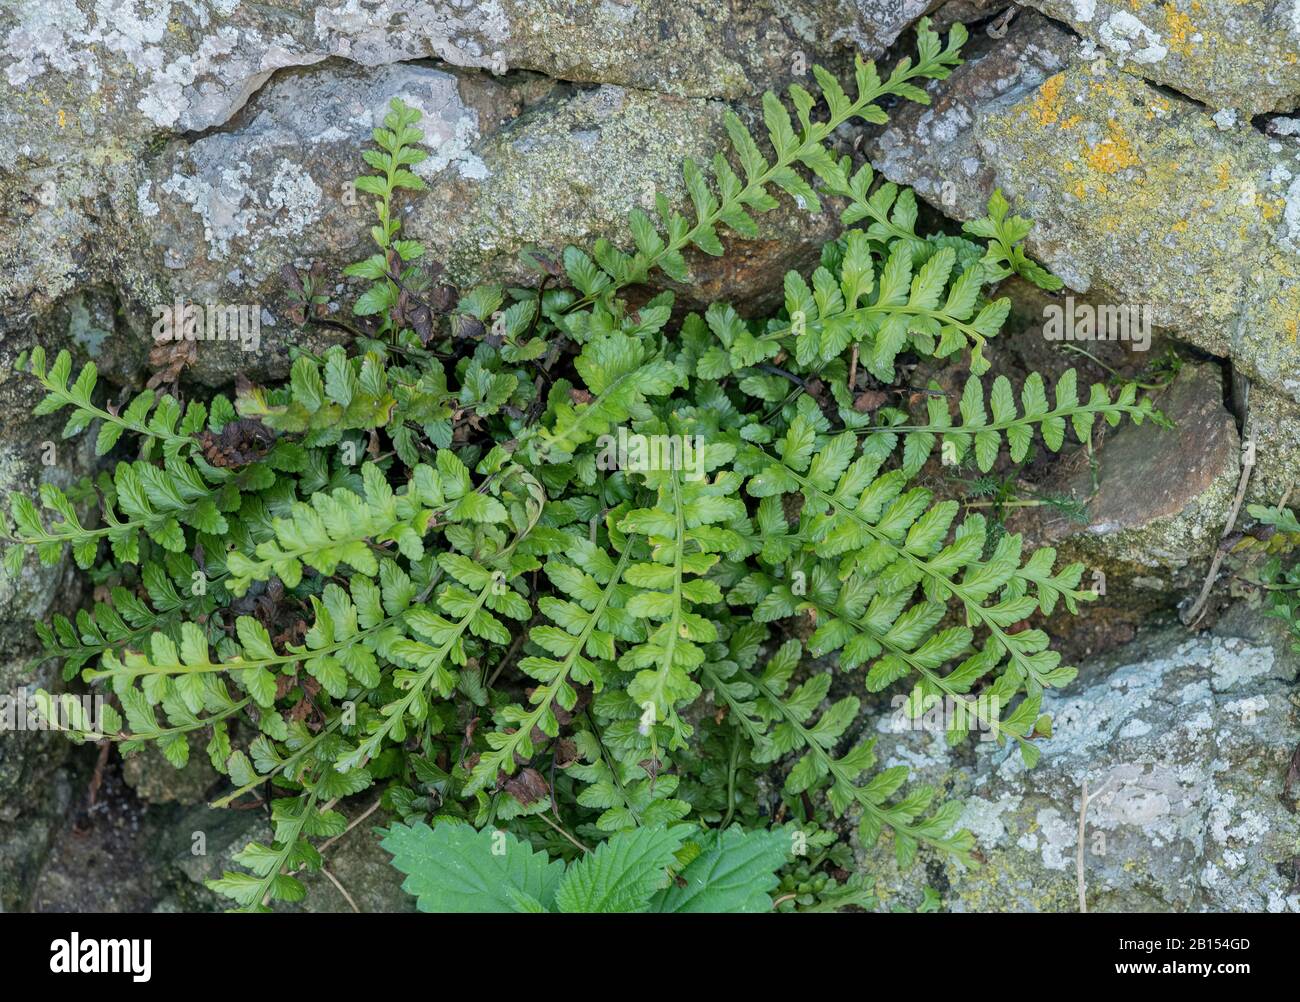 A type of fern, Sea spleenwort, Asplenium marinum, growing among rocks by the sea. Stock Photo